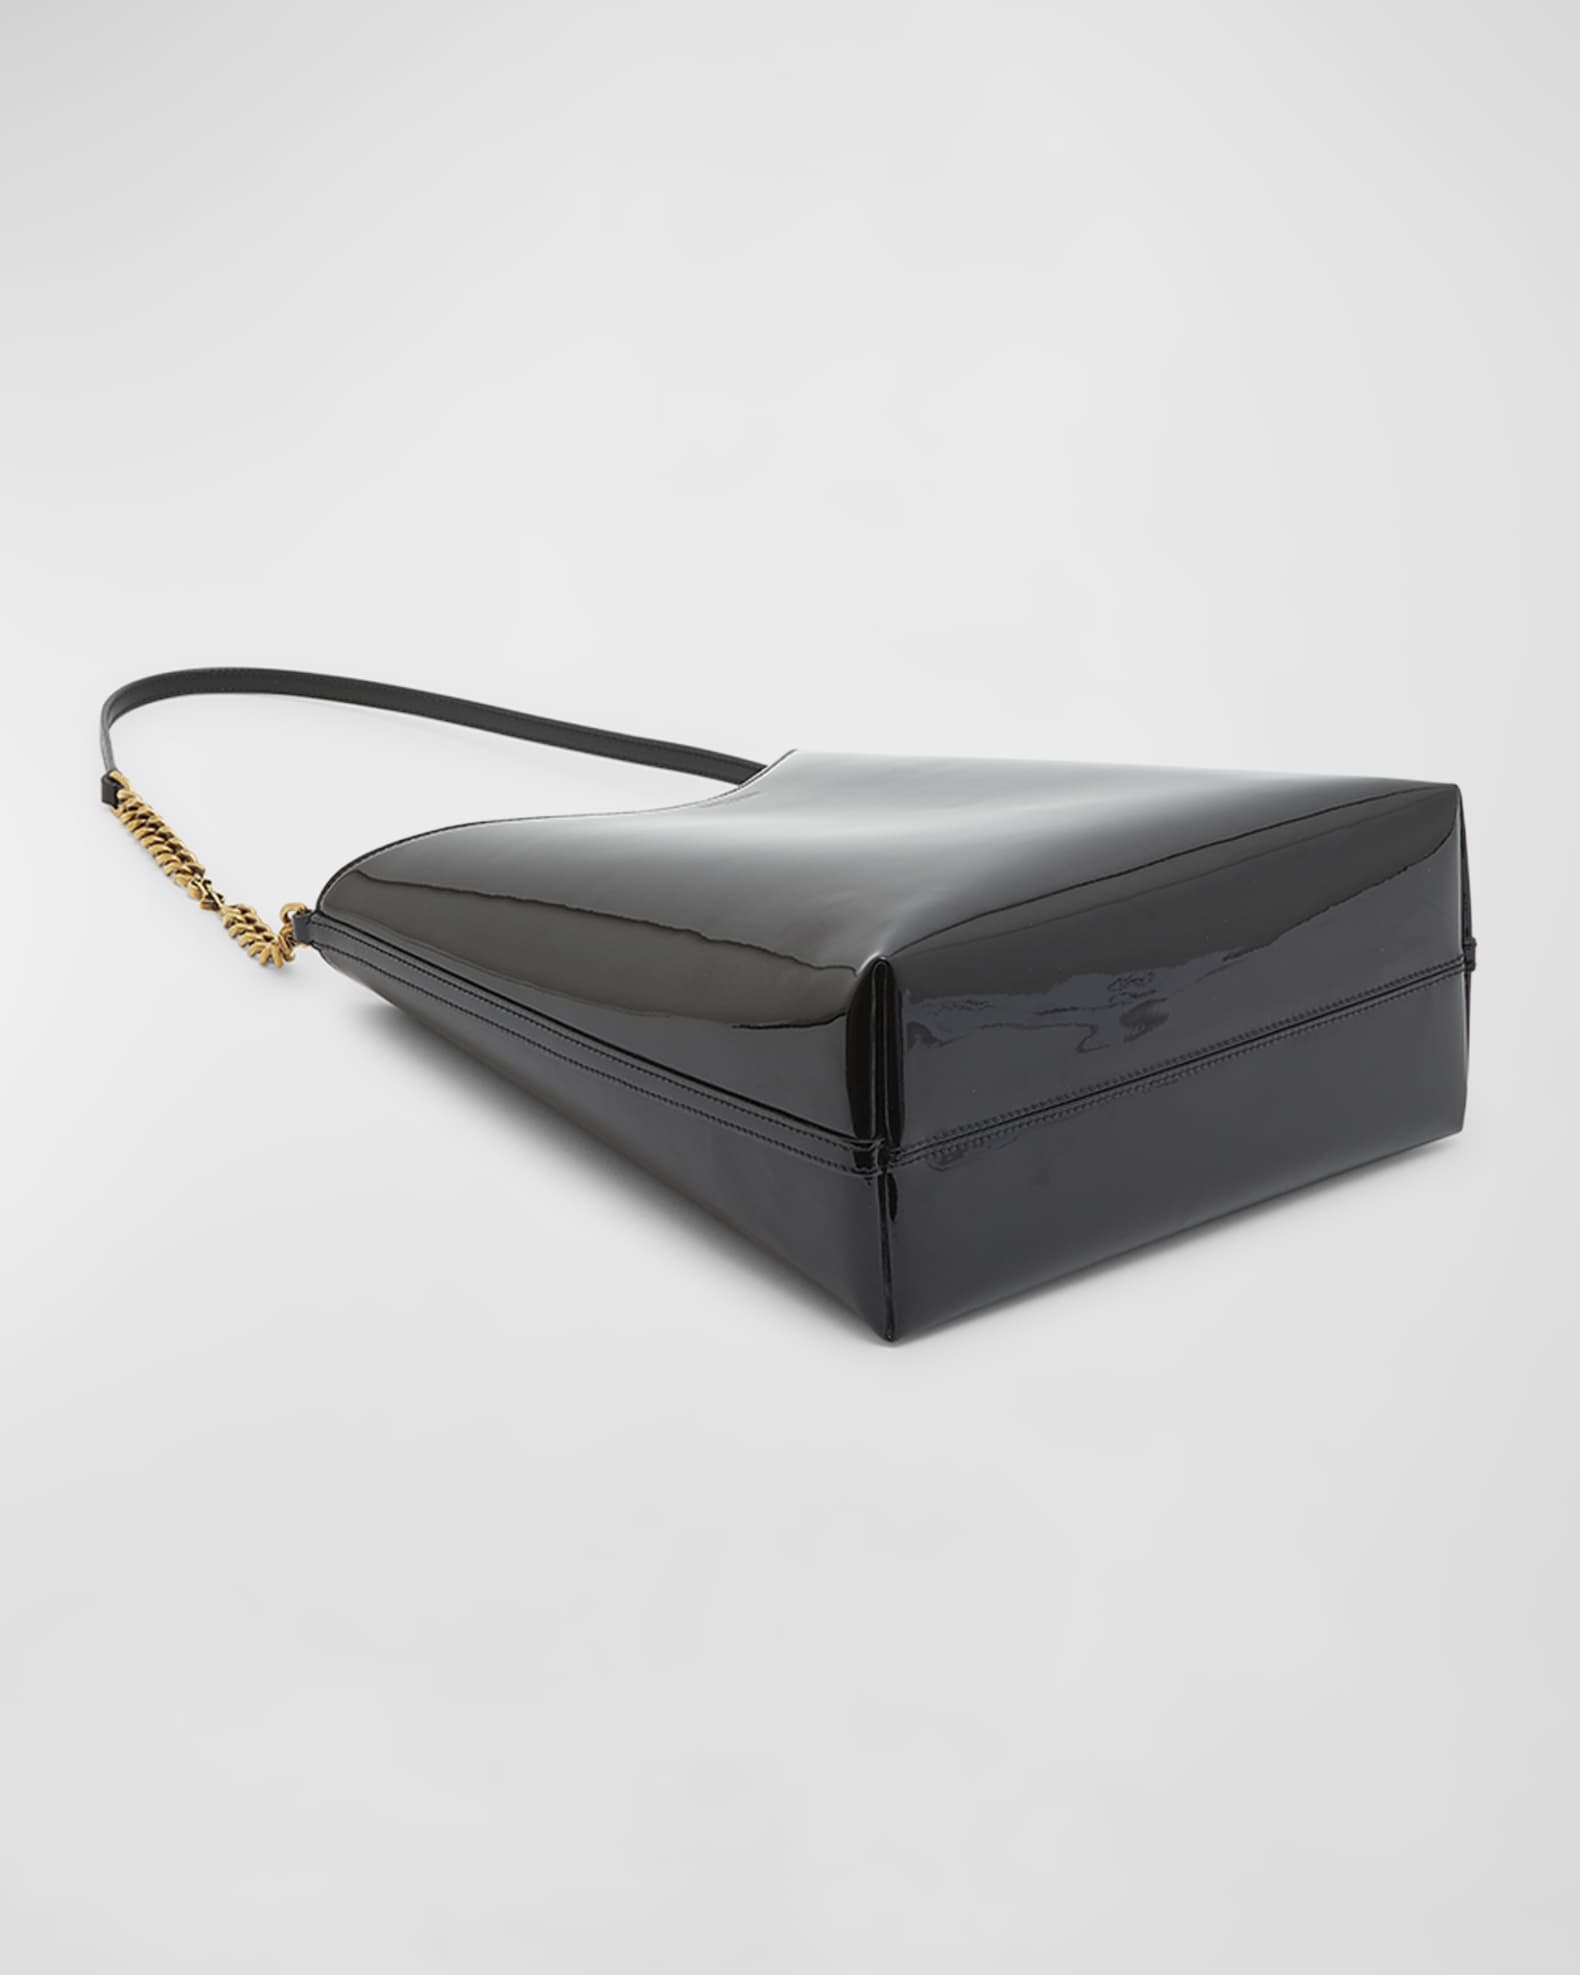 Saint Laurent Sac Patent Leather Hobo Bag | Neiman Marcus